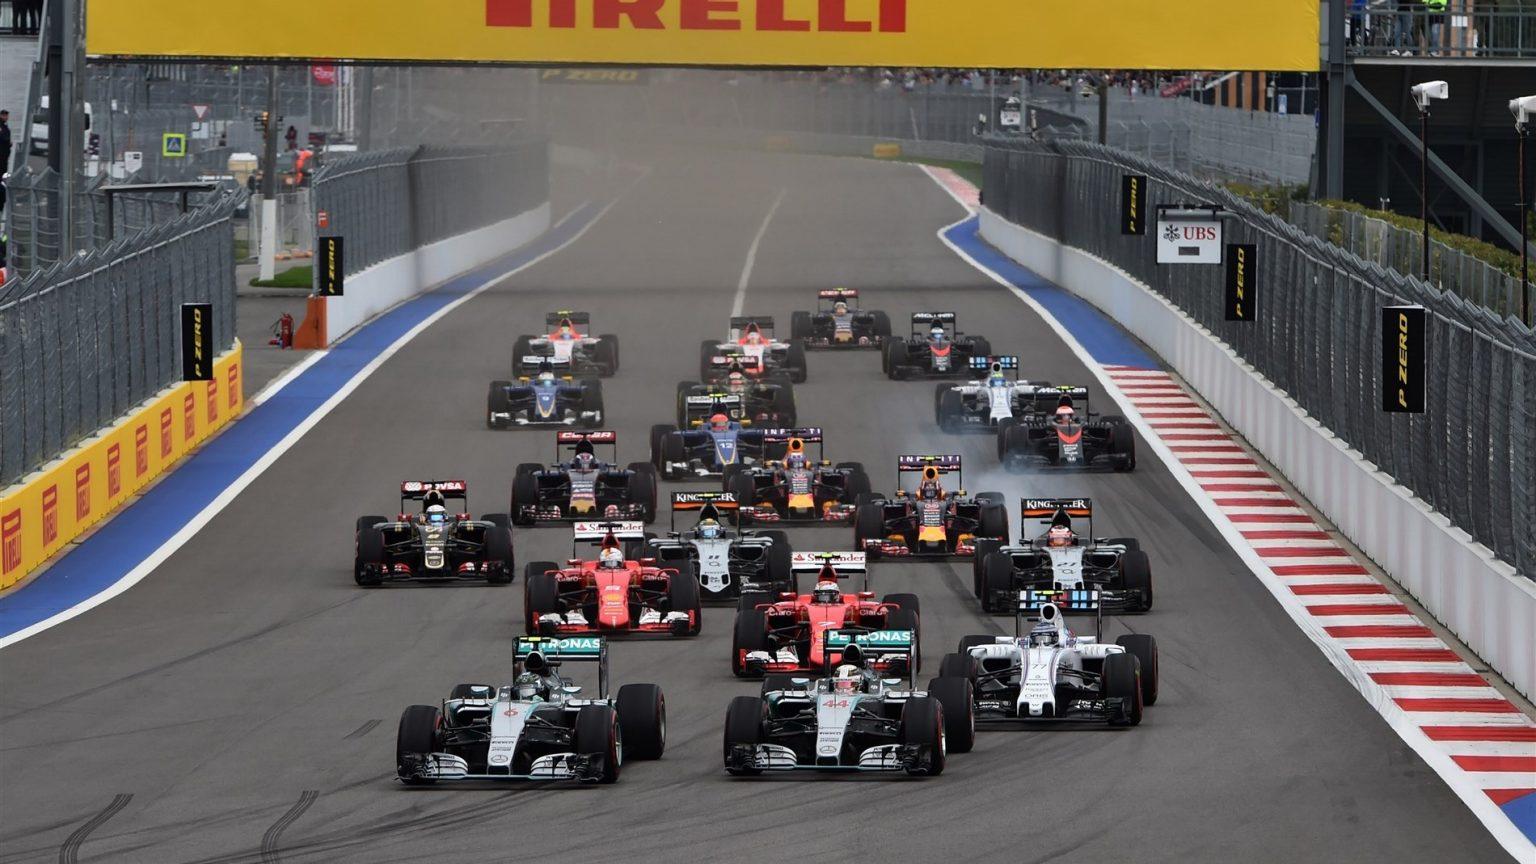 2015 Russian Grand Prix start.